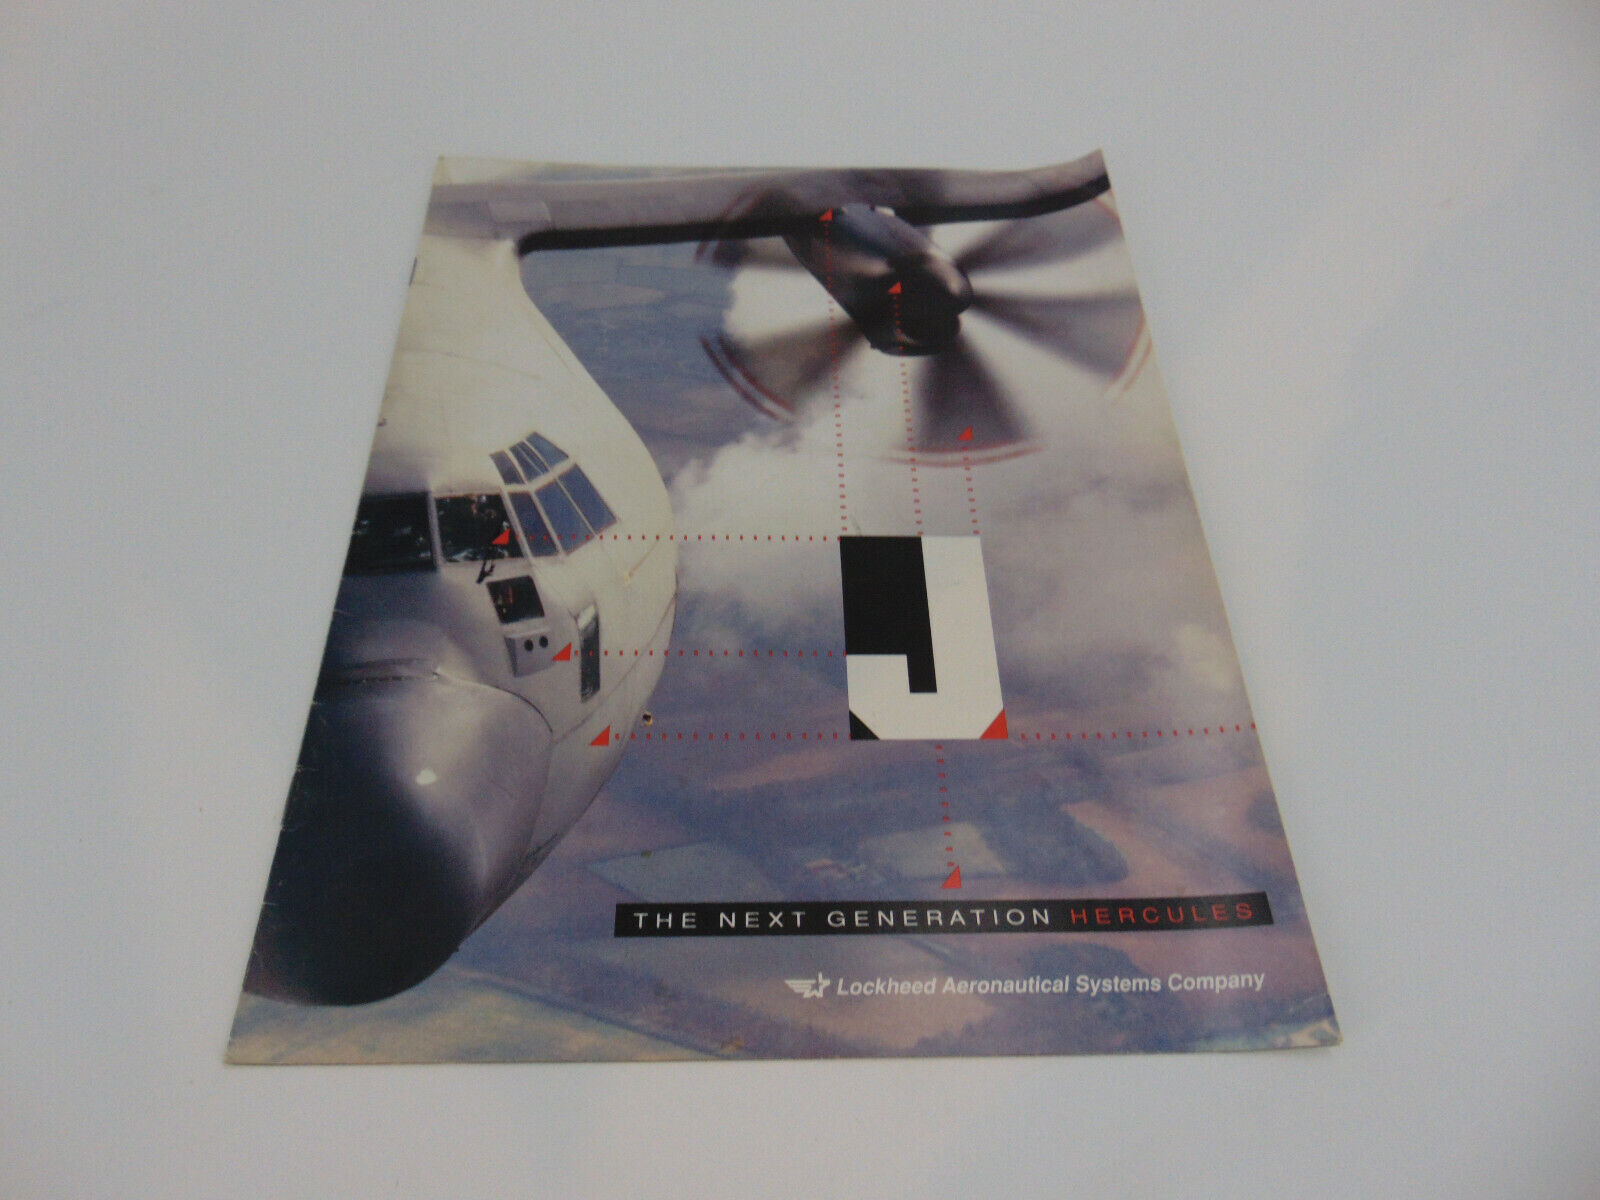 J The Next Generation Hercules super Lockheed Aeronautical Systems booklet 1996